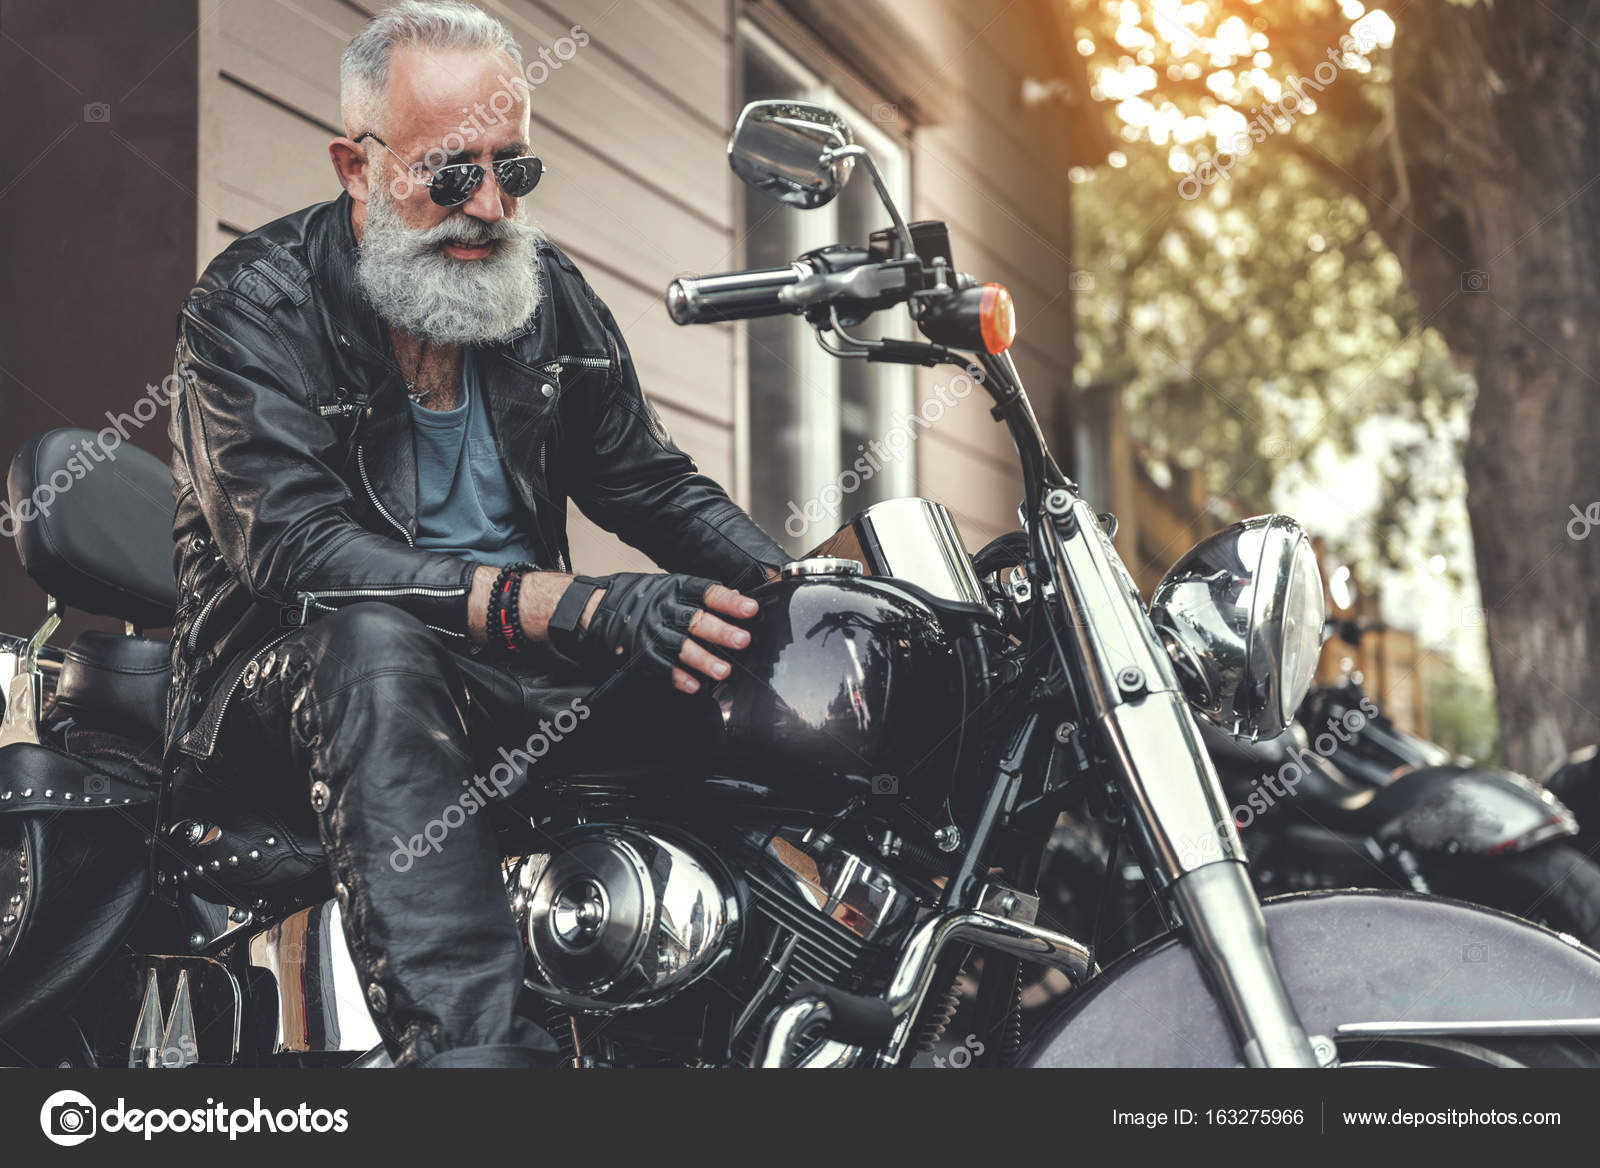 depositphotos_163275966-stock-photo-interested-old-man-checking-motorbike.jpg